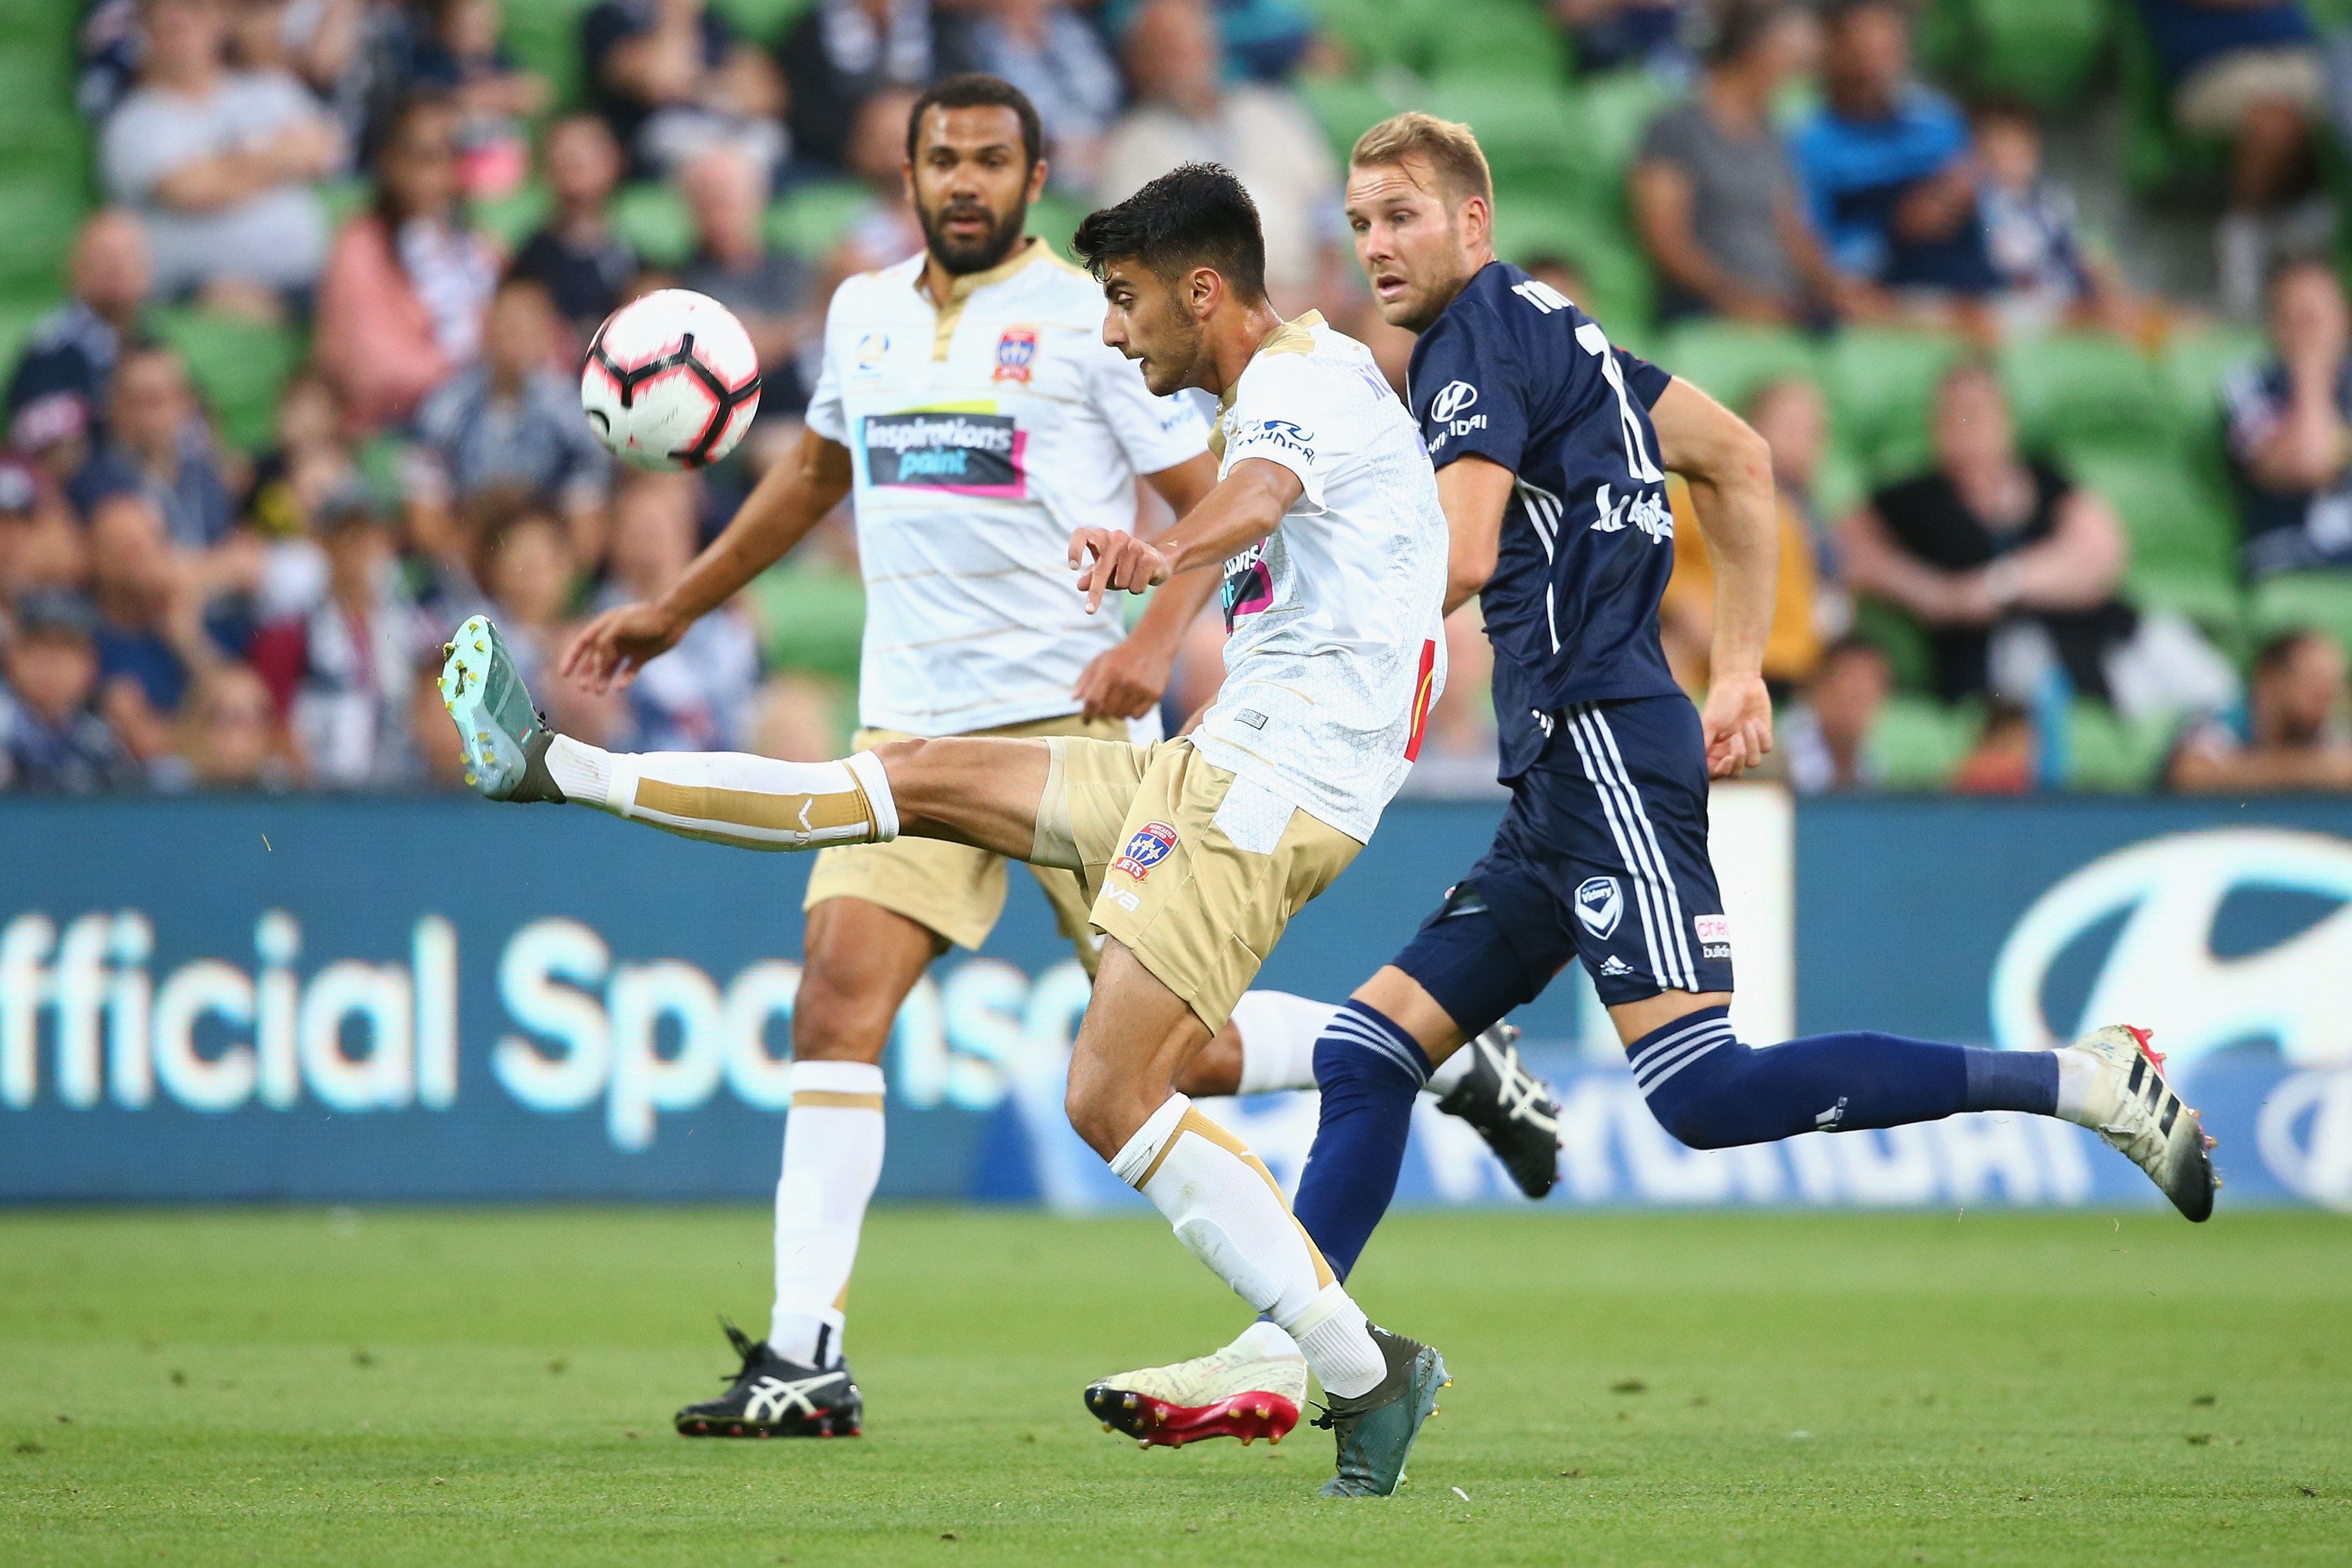 Johnny Koutroumbis, Newcastle Jets v Melbourne Victory, Hyundai A-League 2018/19 Season